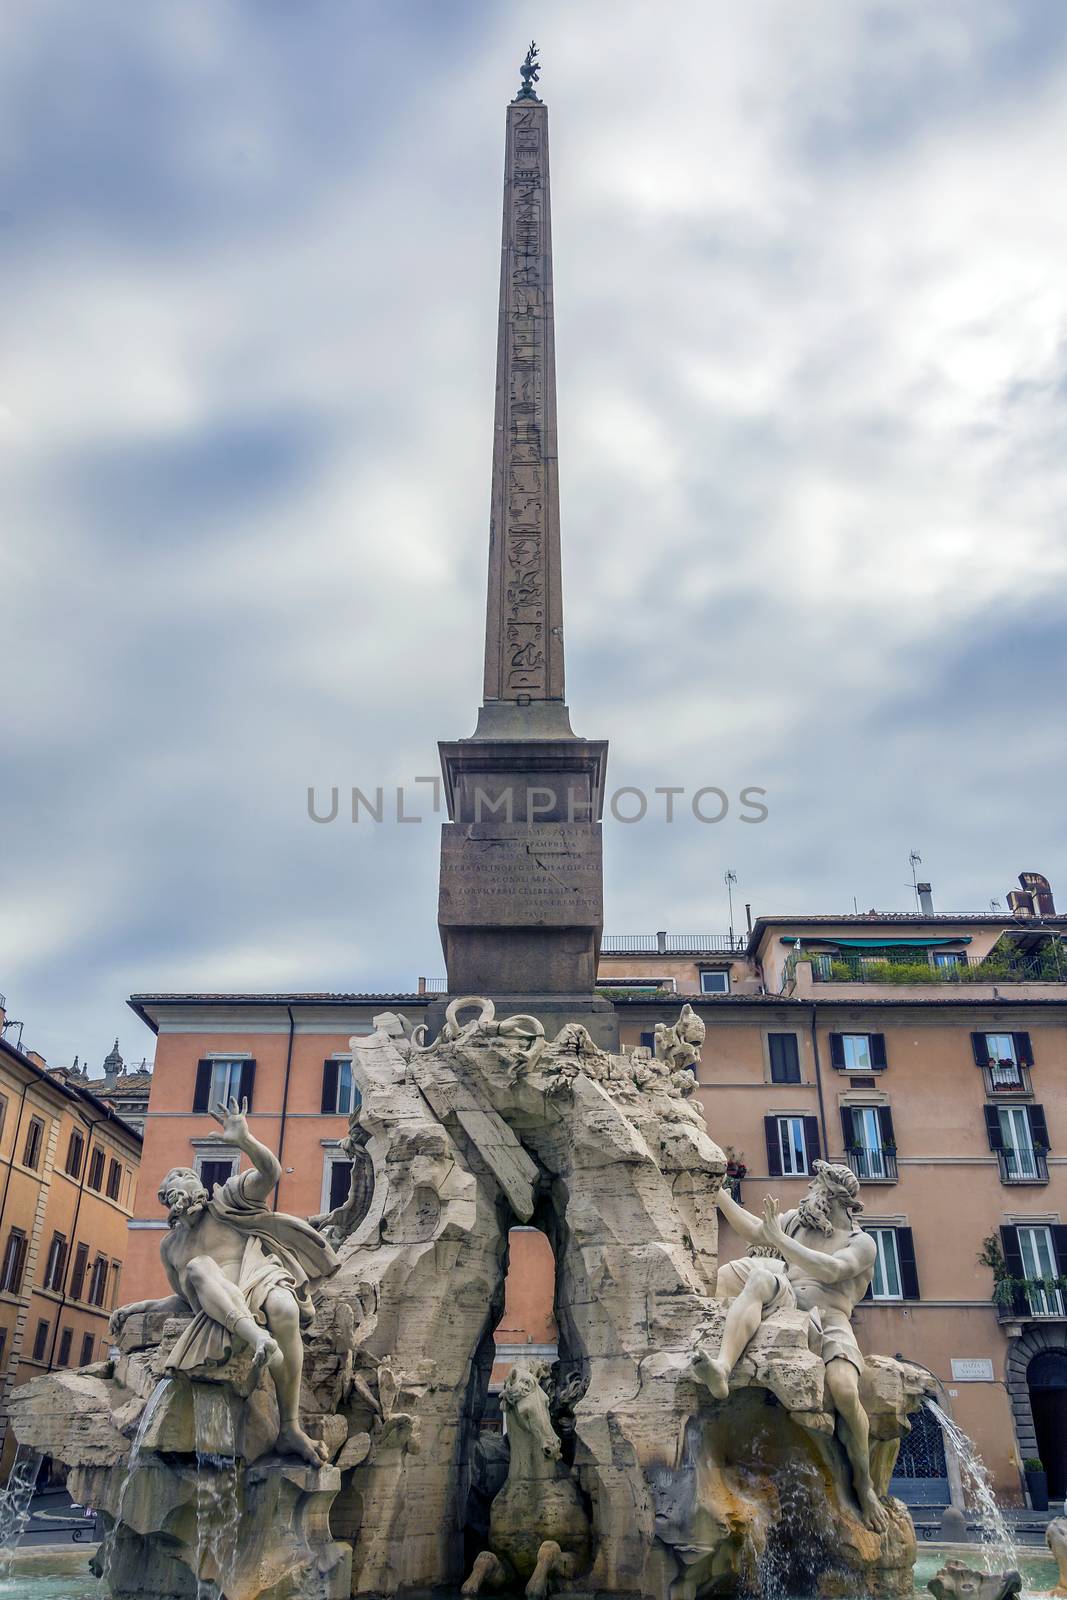 Four rivers fountain in Piazza Navona, Rome, Italy by rarrarorro